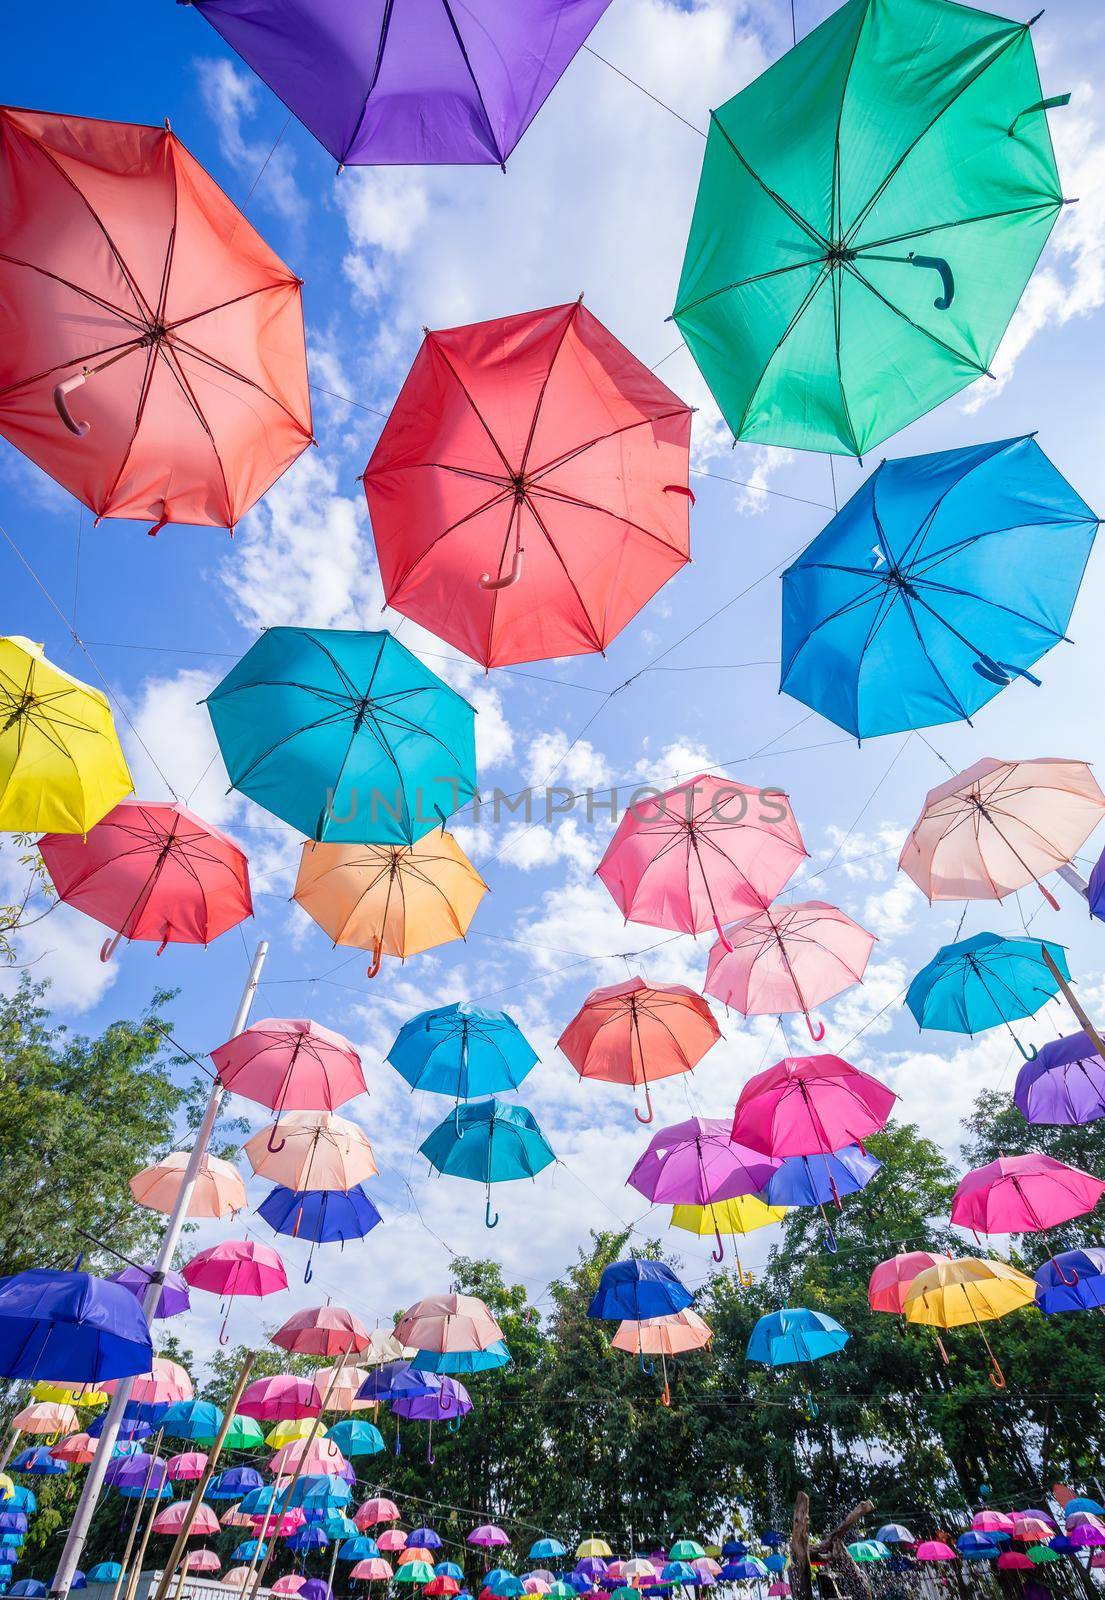 Colorful umbrellas in the sky by domonite